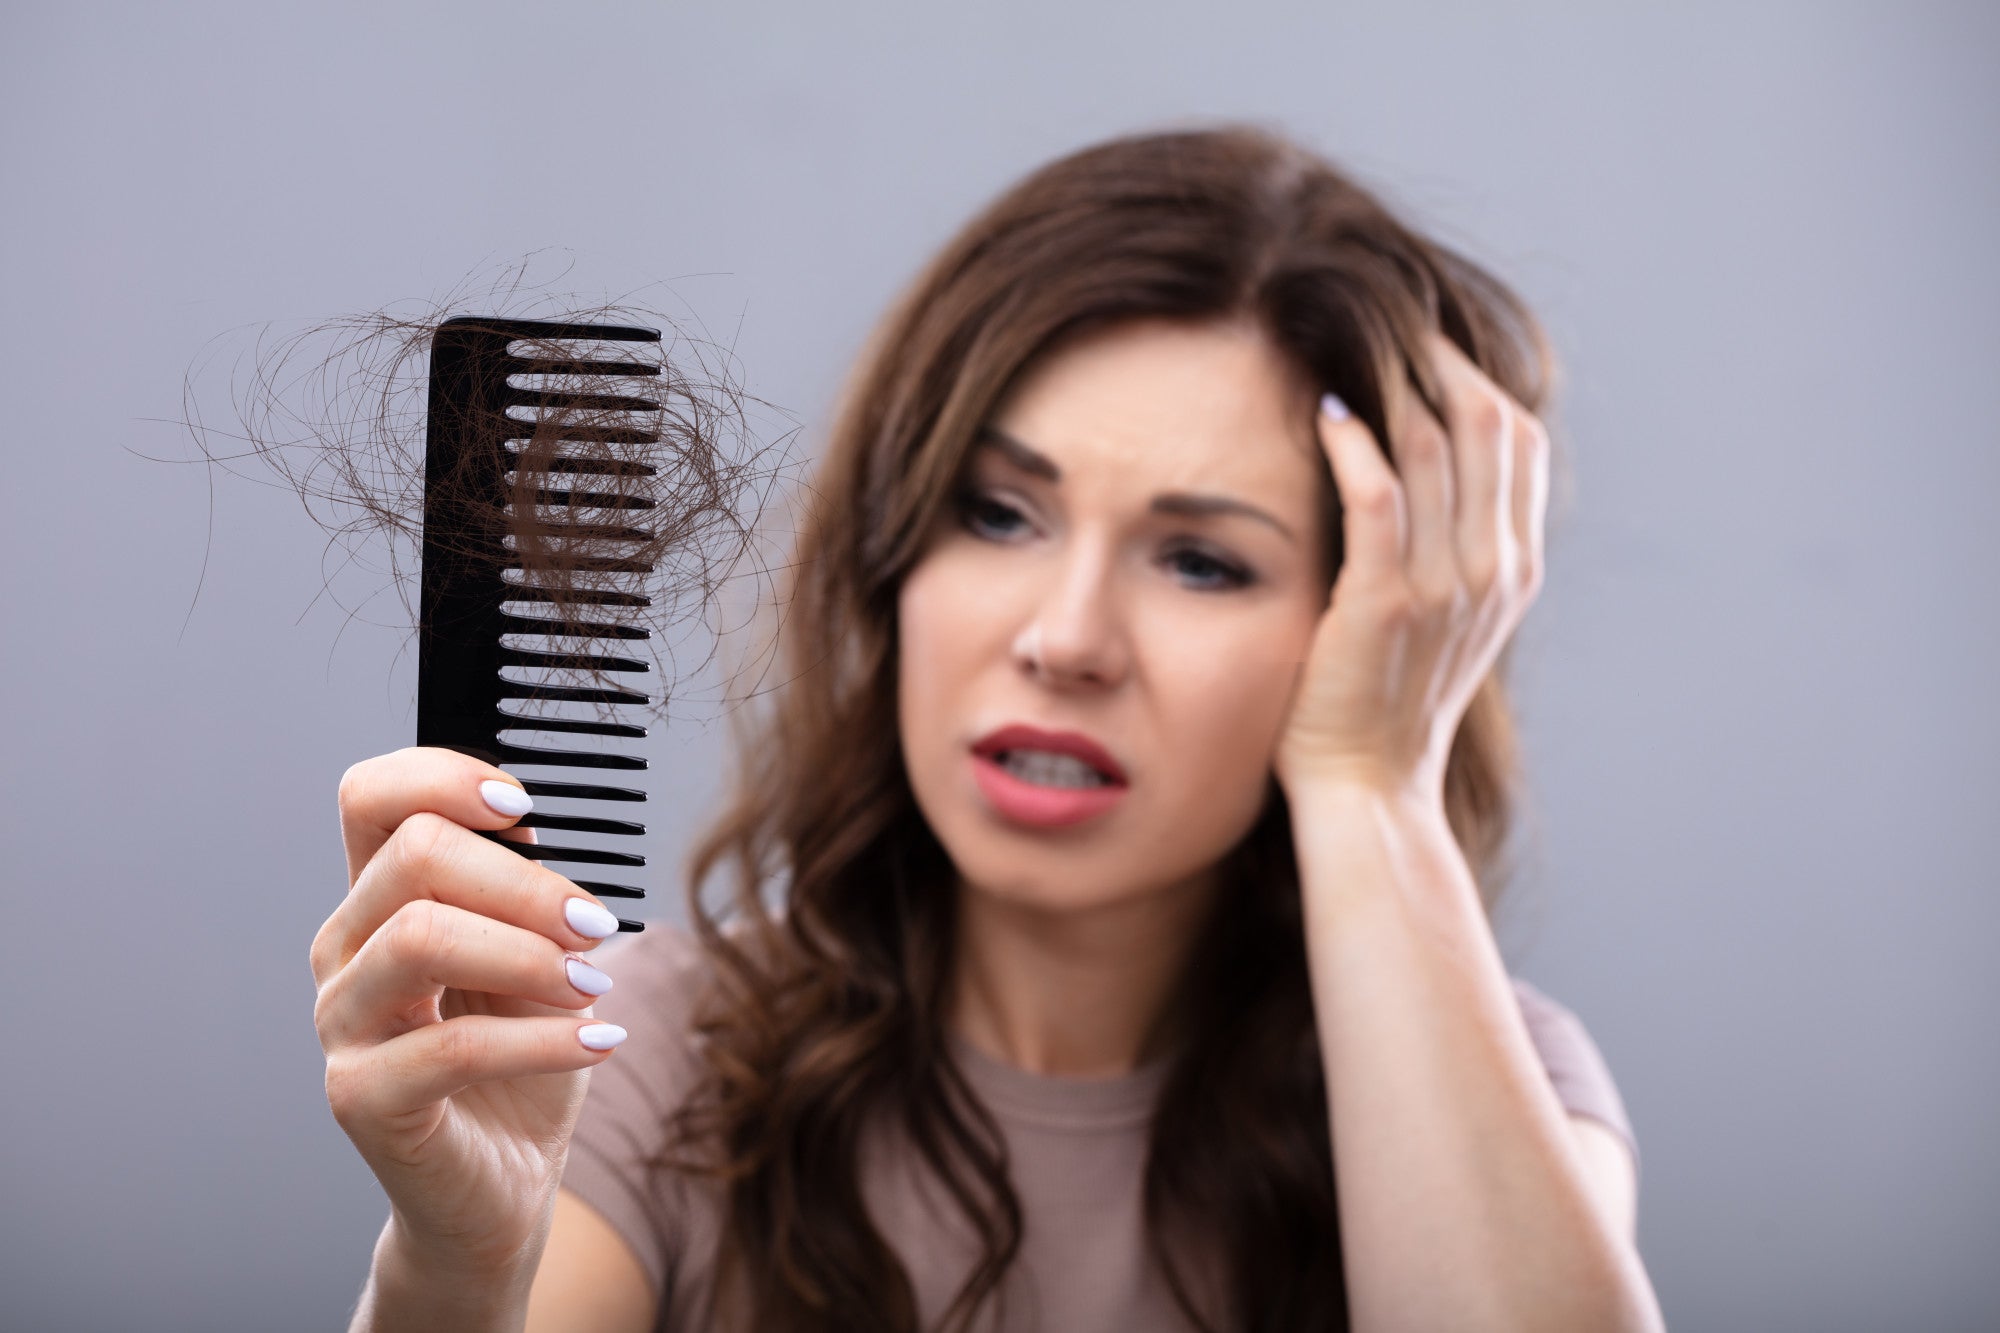 What causes flat hair?